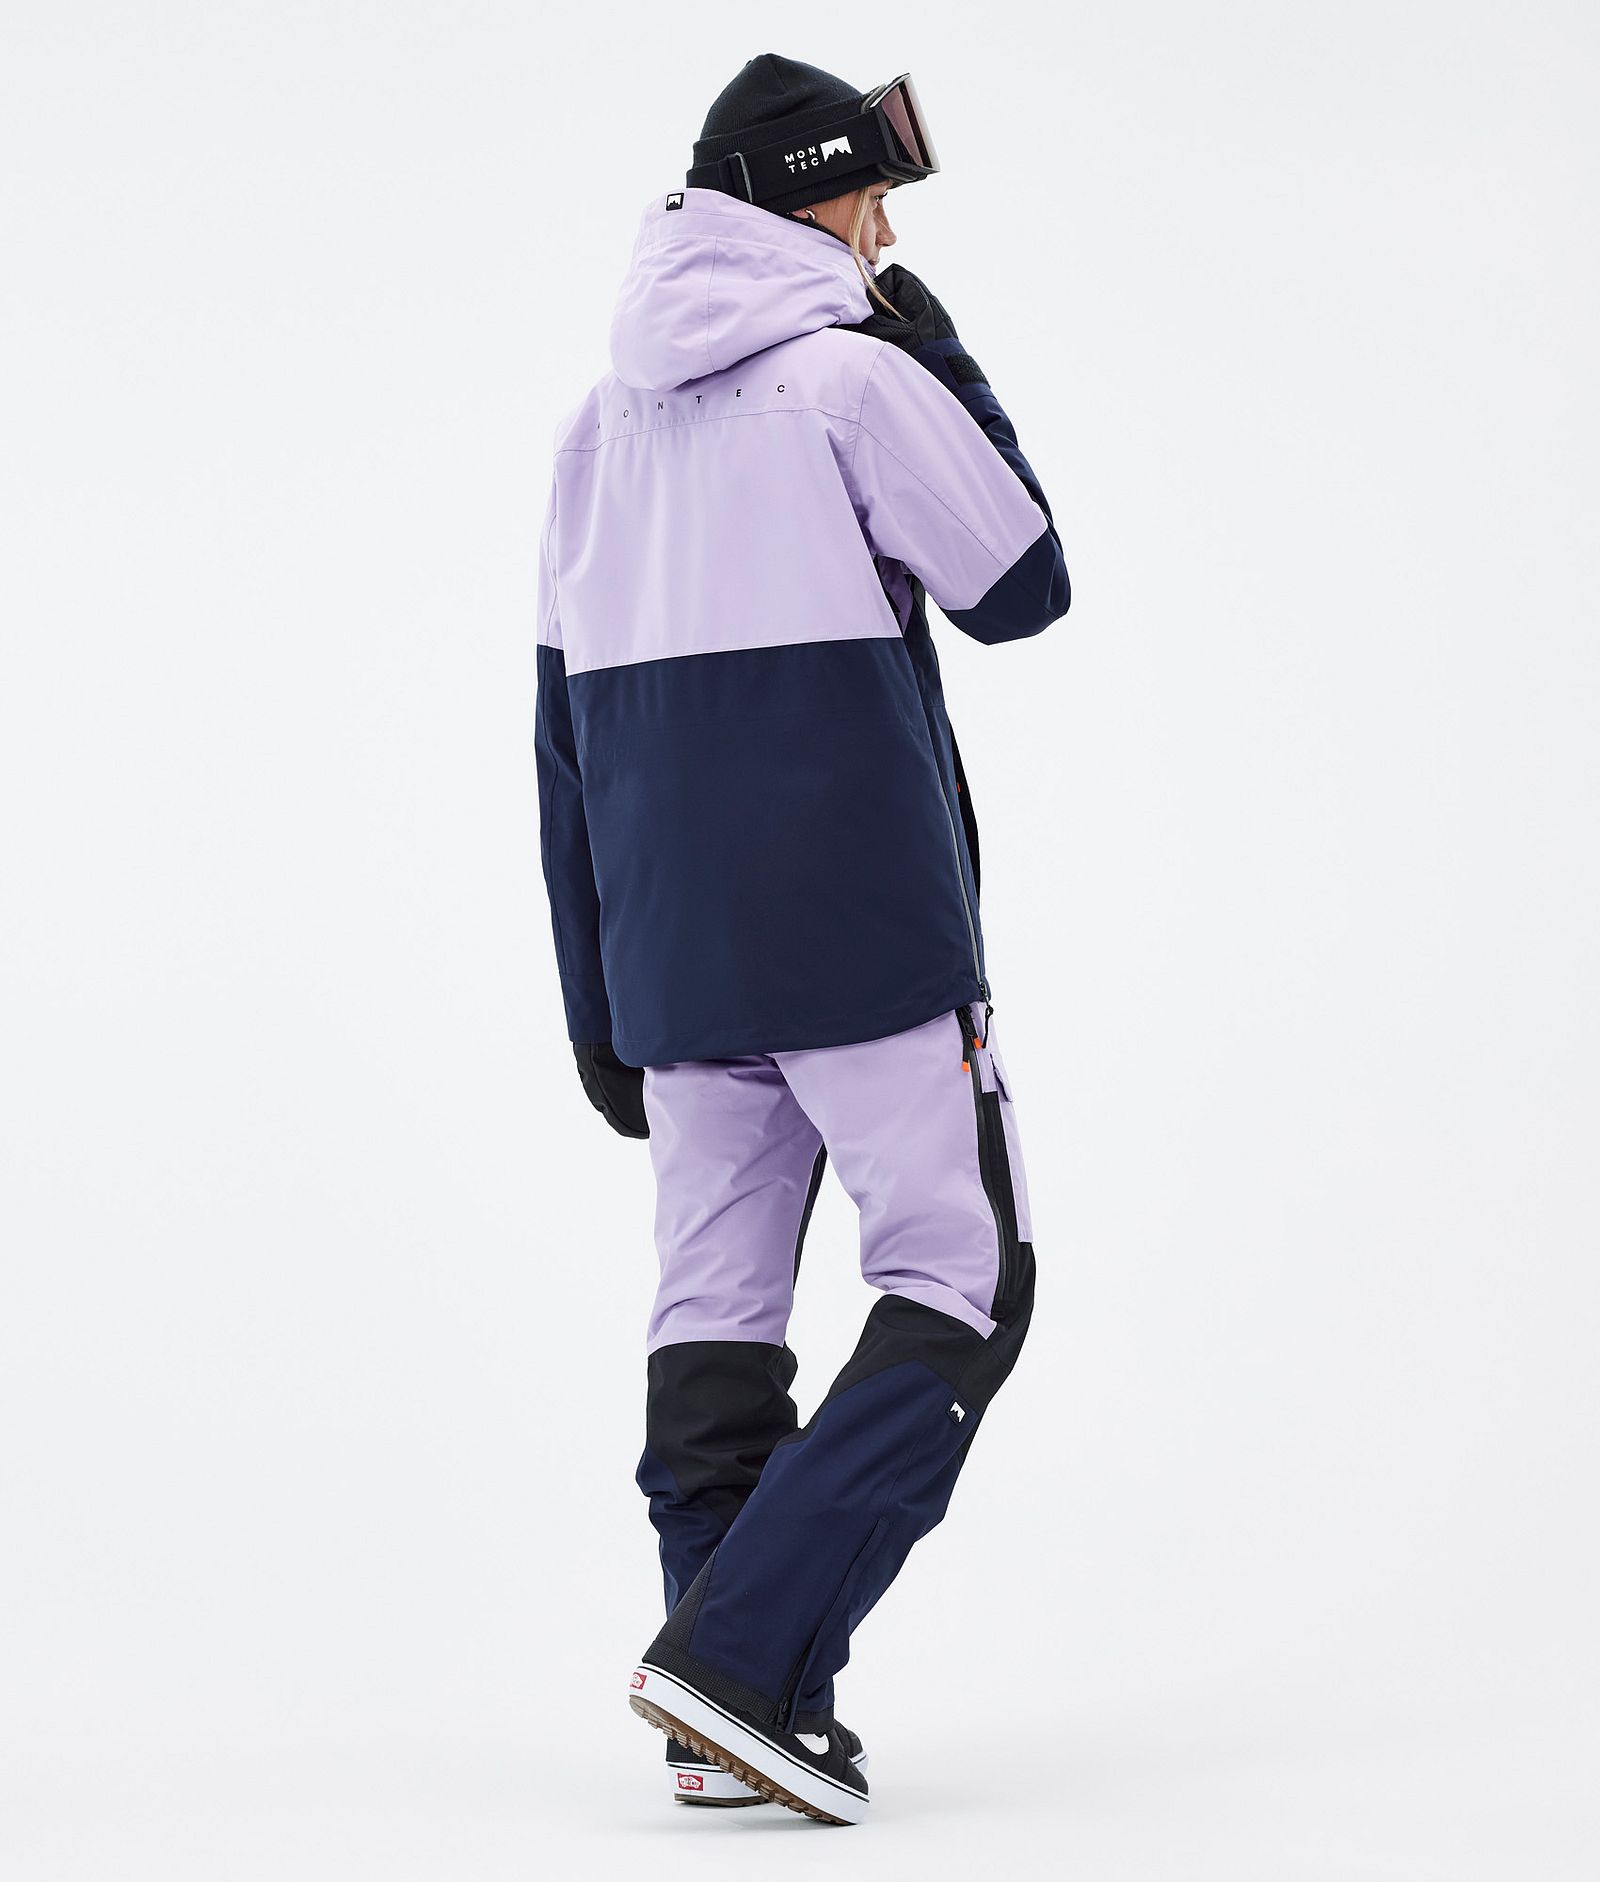 Dune W Snowboardový Outfit Dámské Faded Violet/Black/Dark Blue